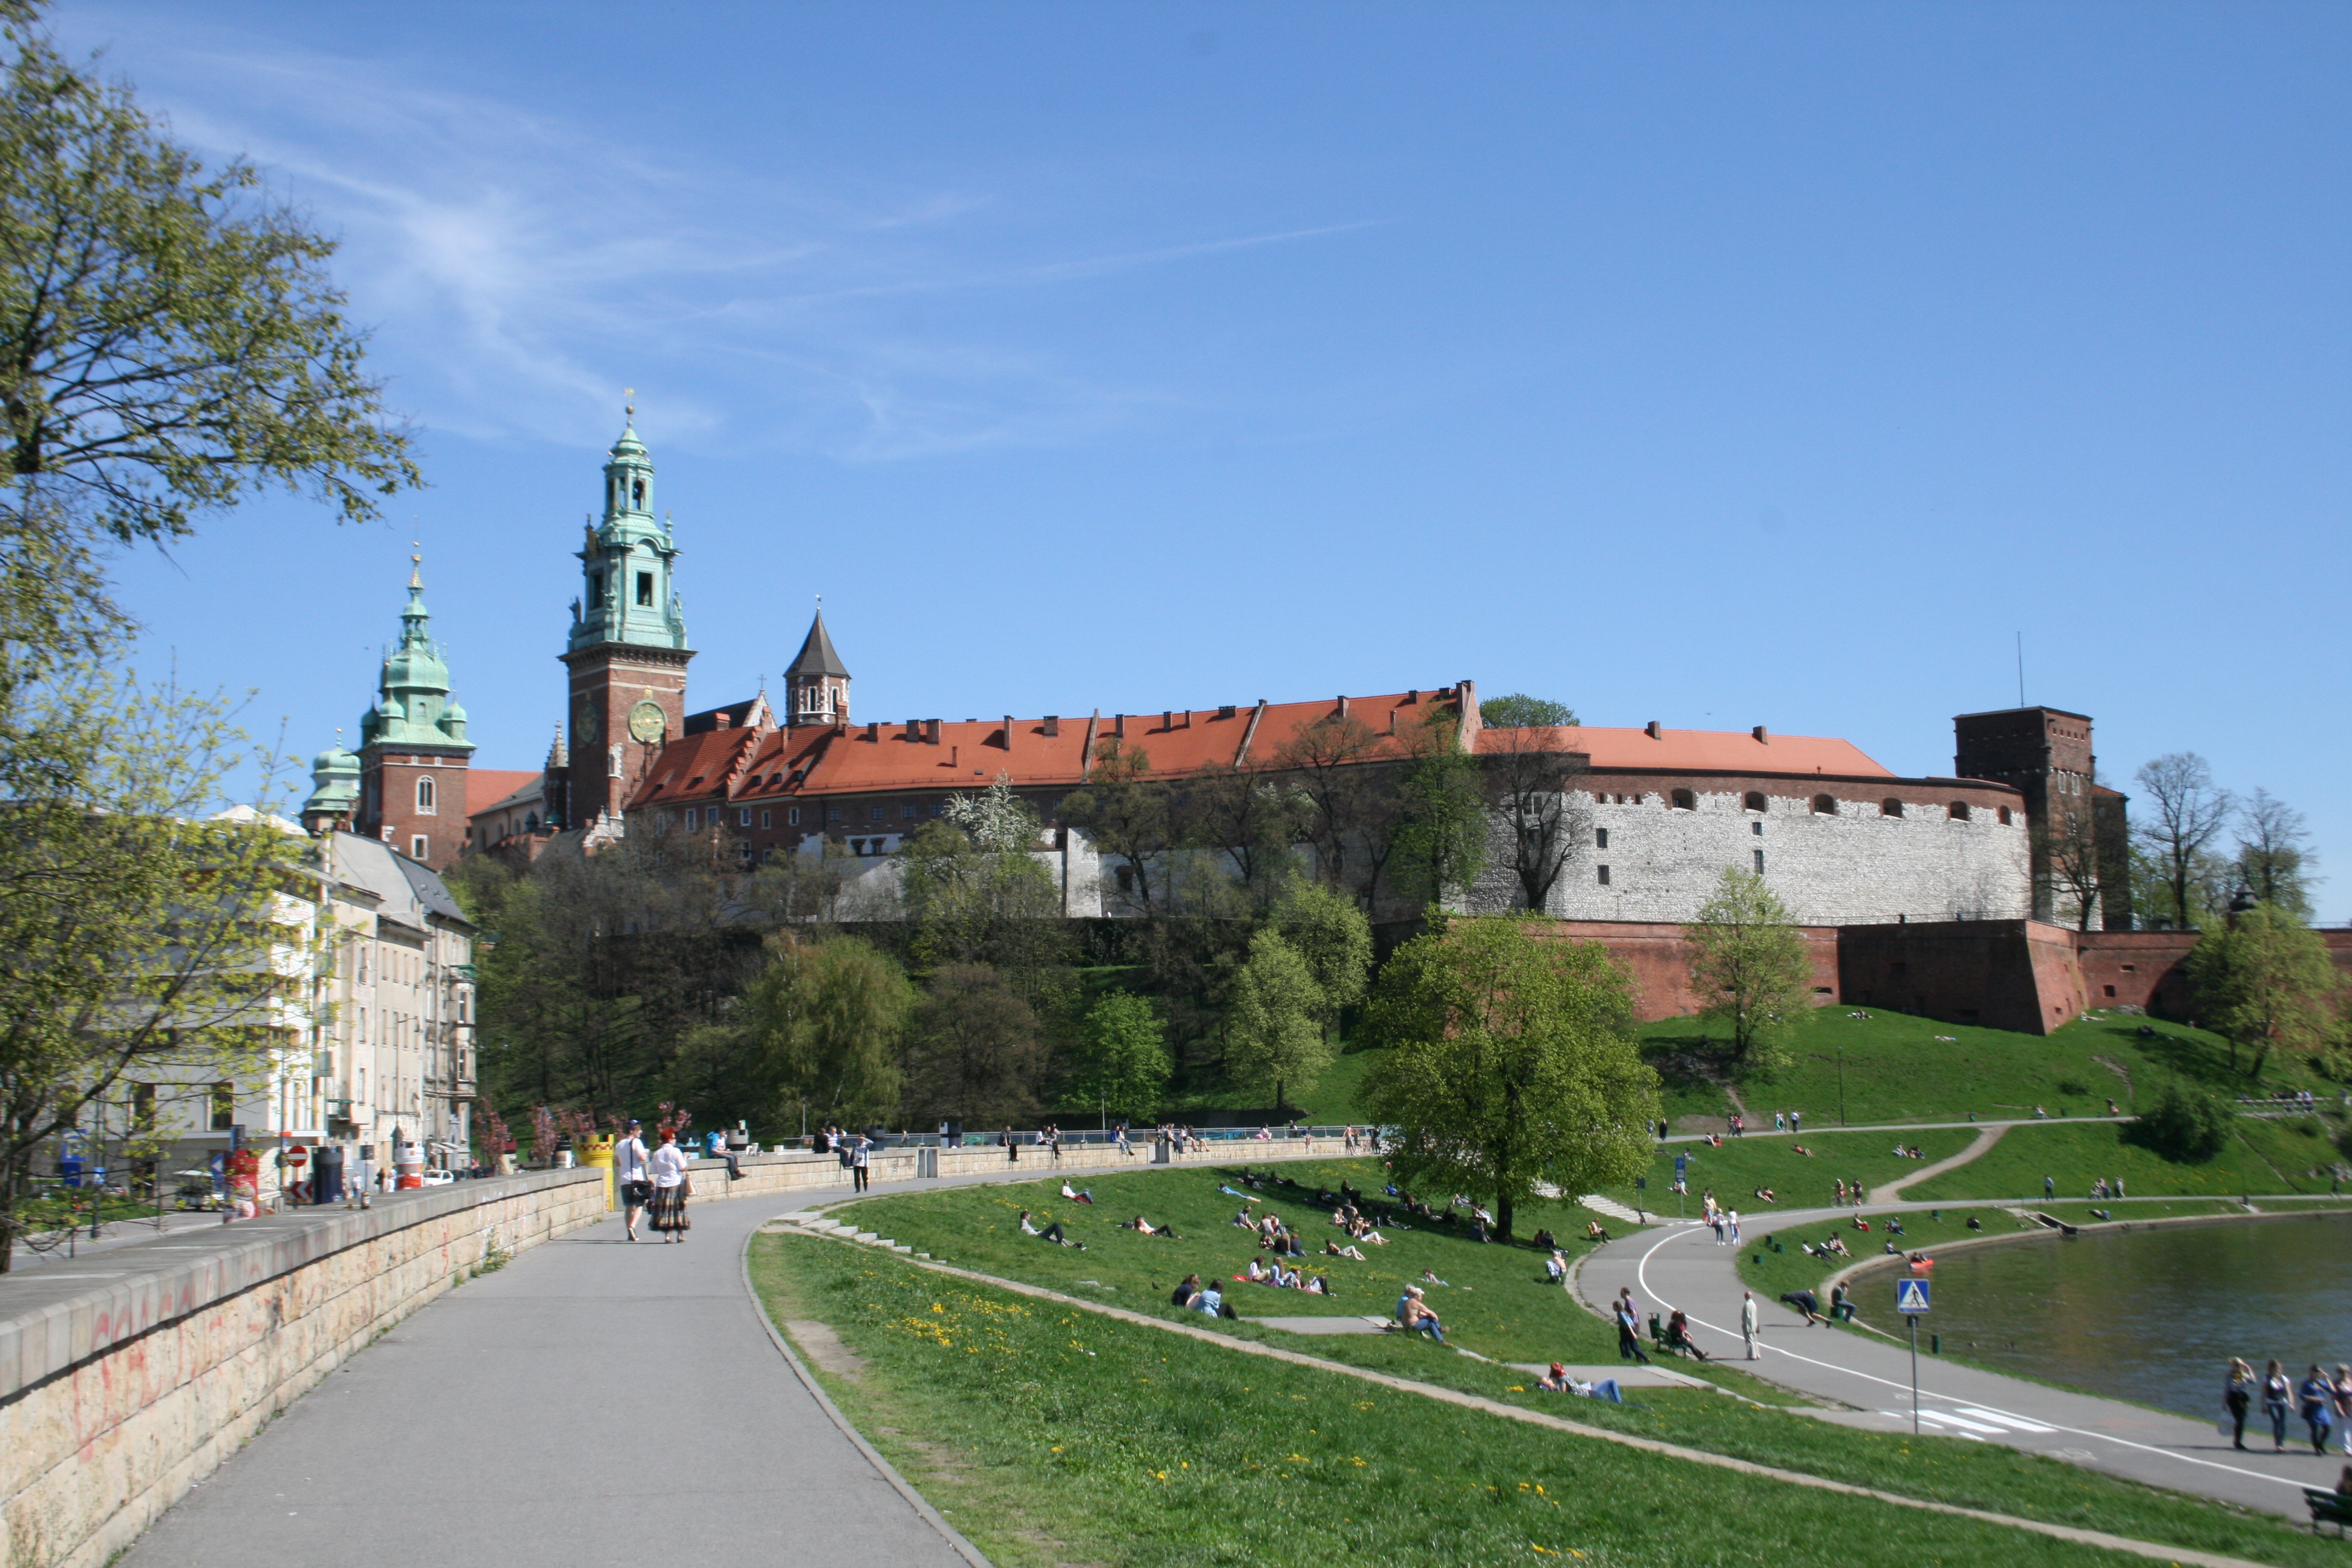 Cracow (Krakow), Poland, April 2012